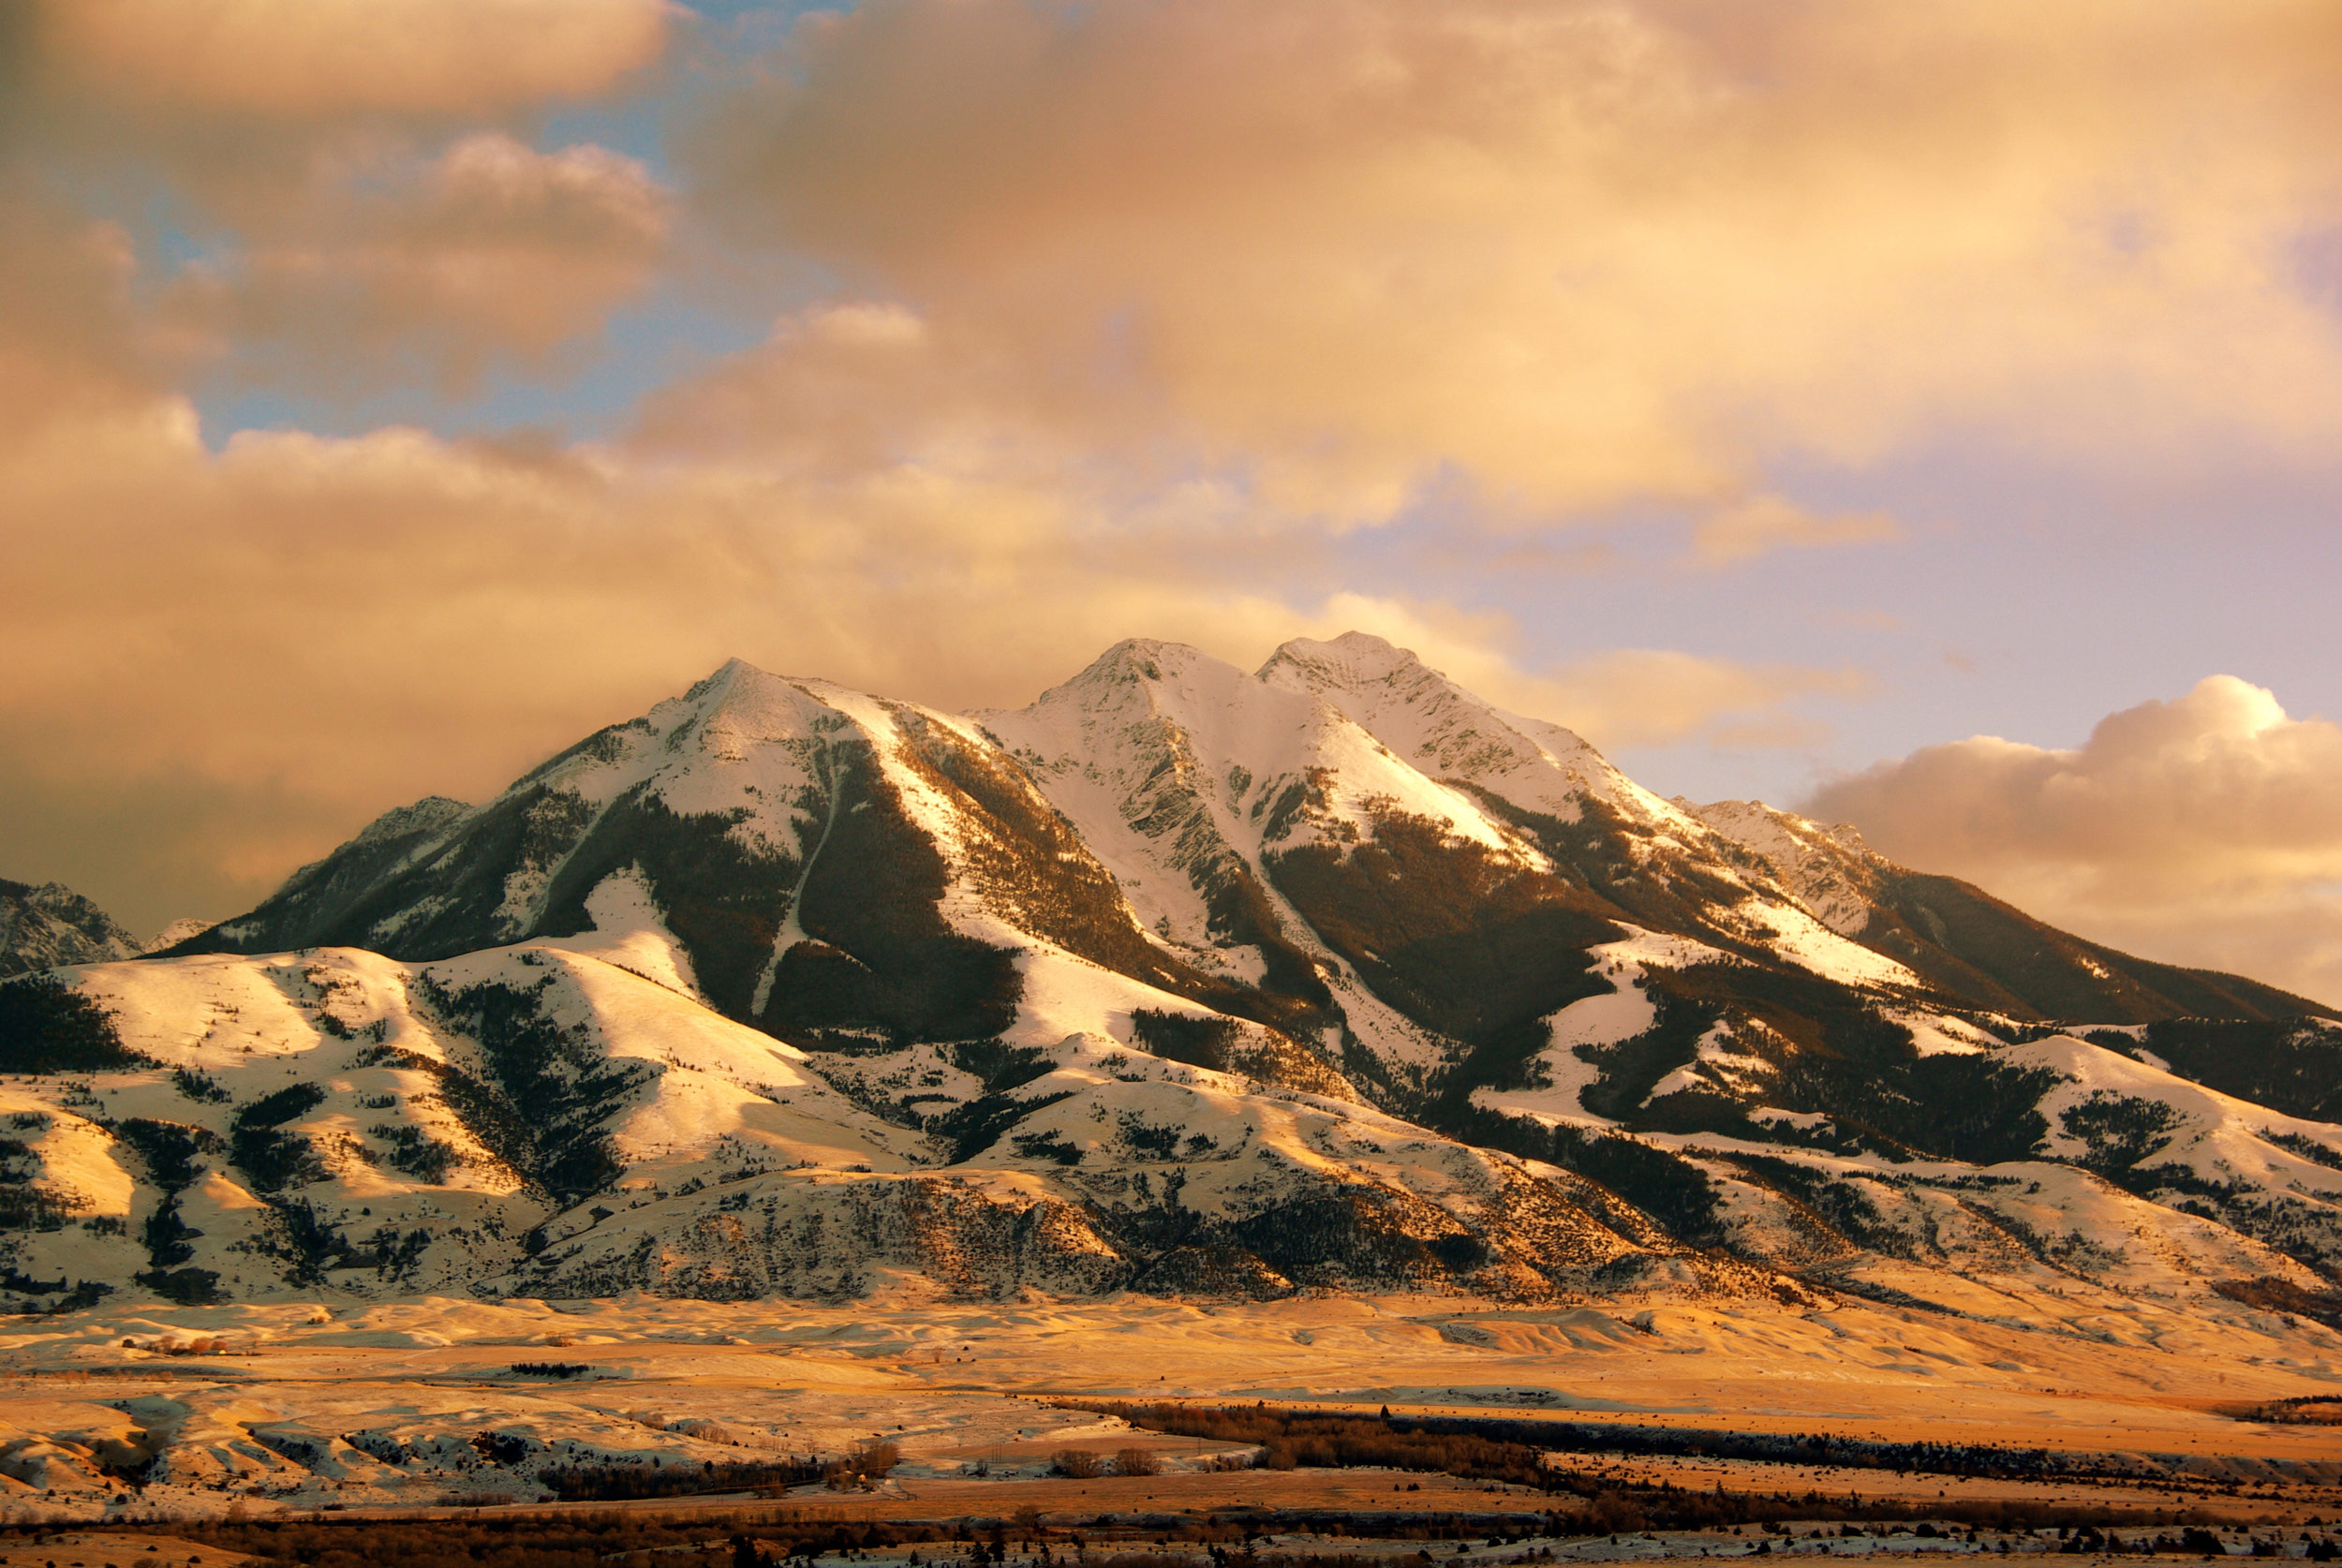 Emigrant Peak in Montana, where Eduardo grew up